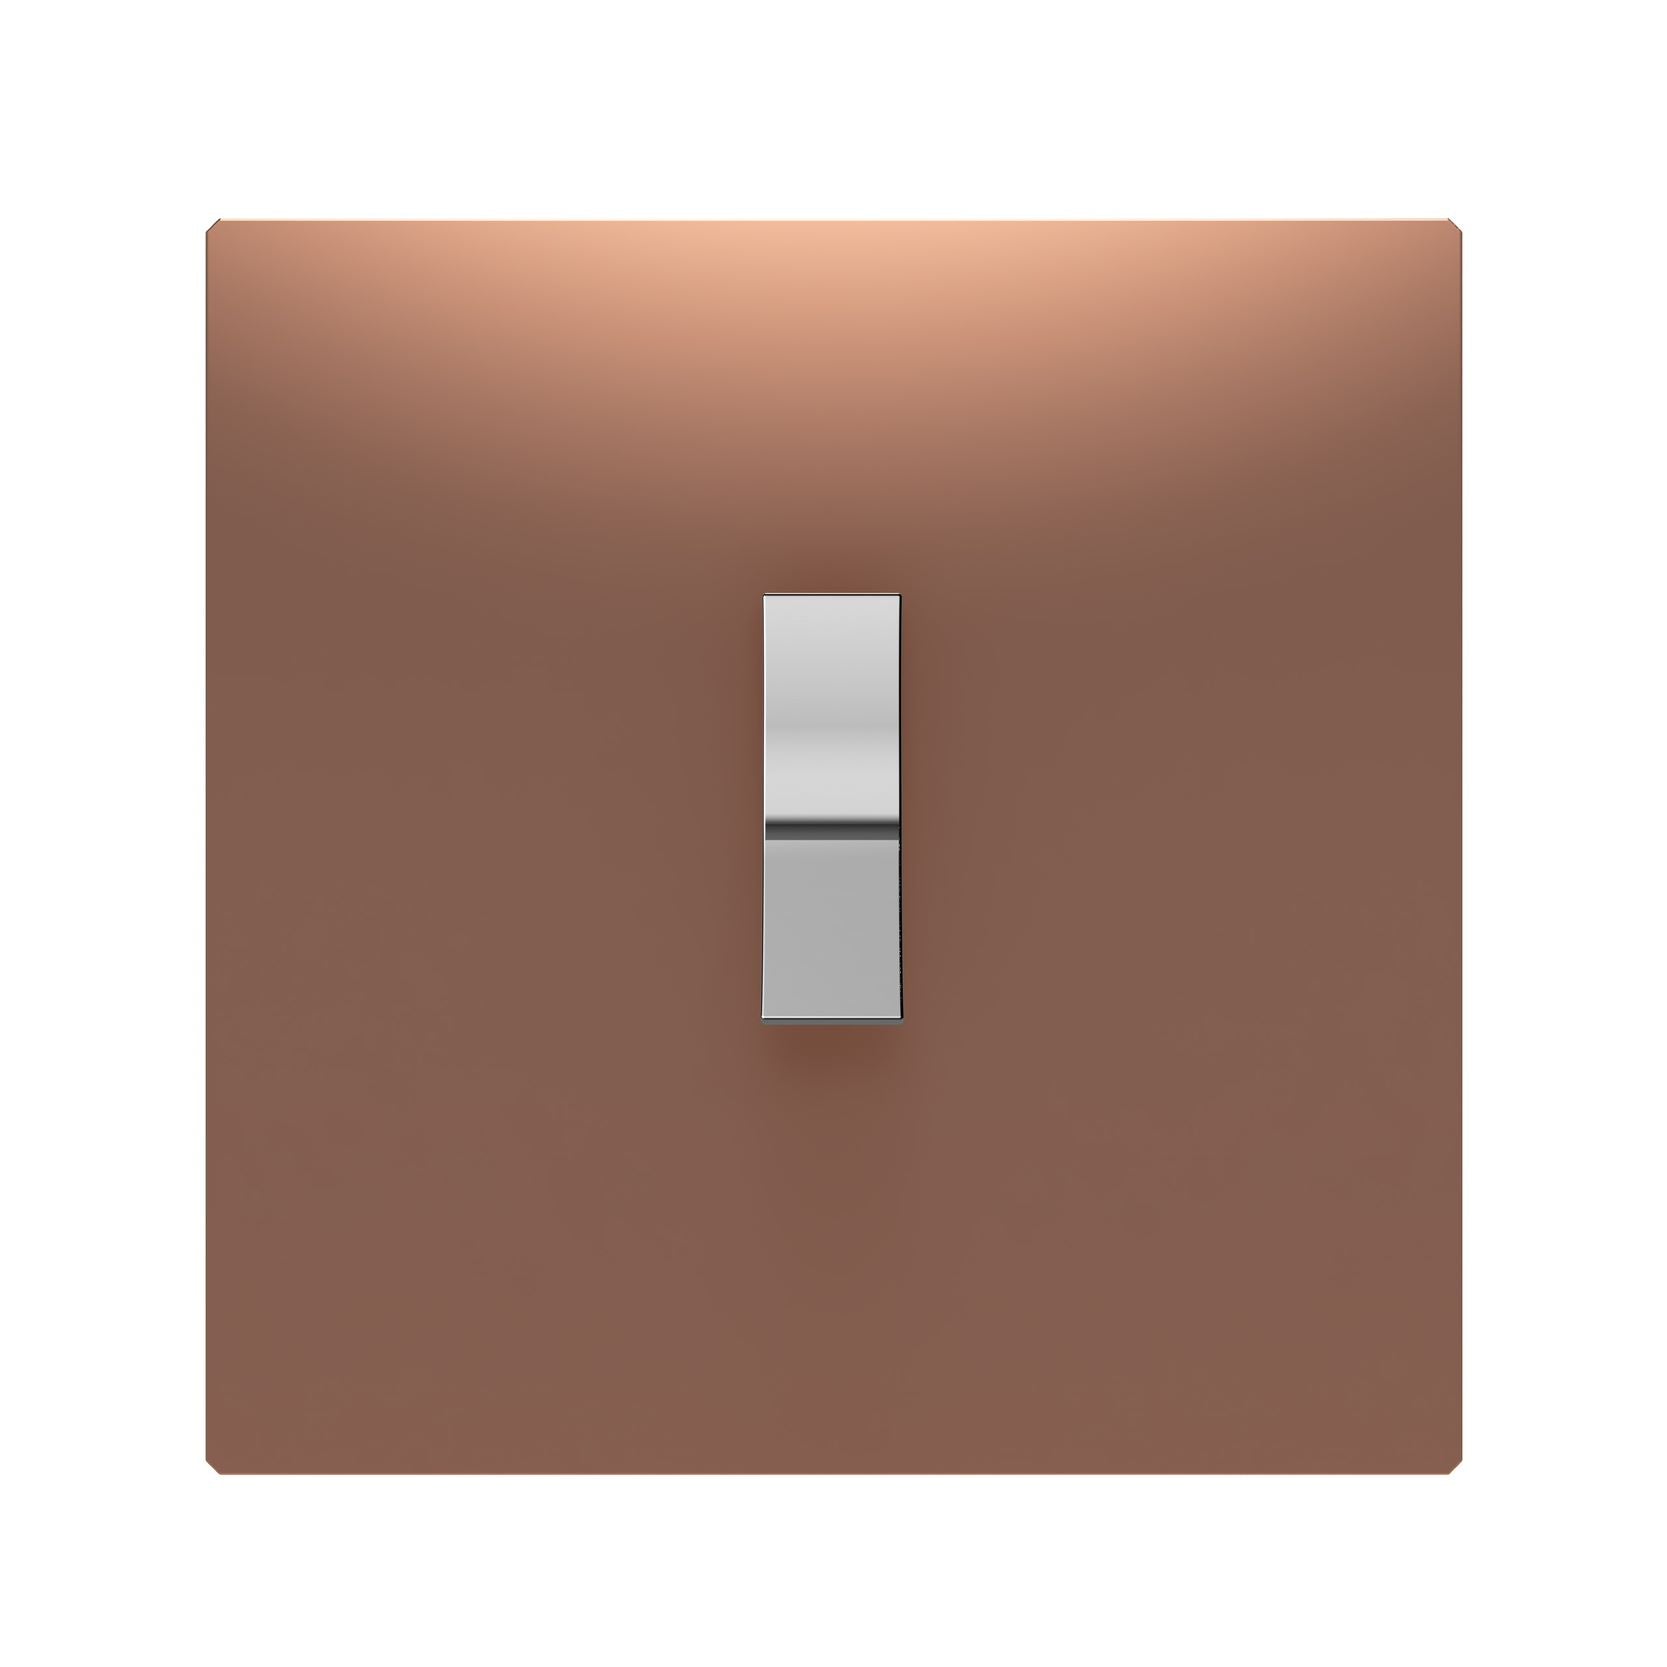 Bridge Switch in Bright Copper with a Brass Chrome Knob